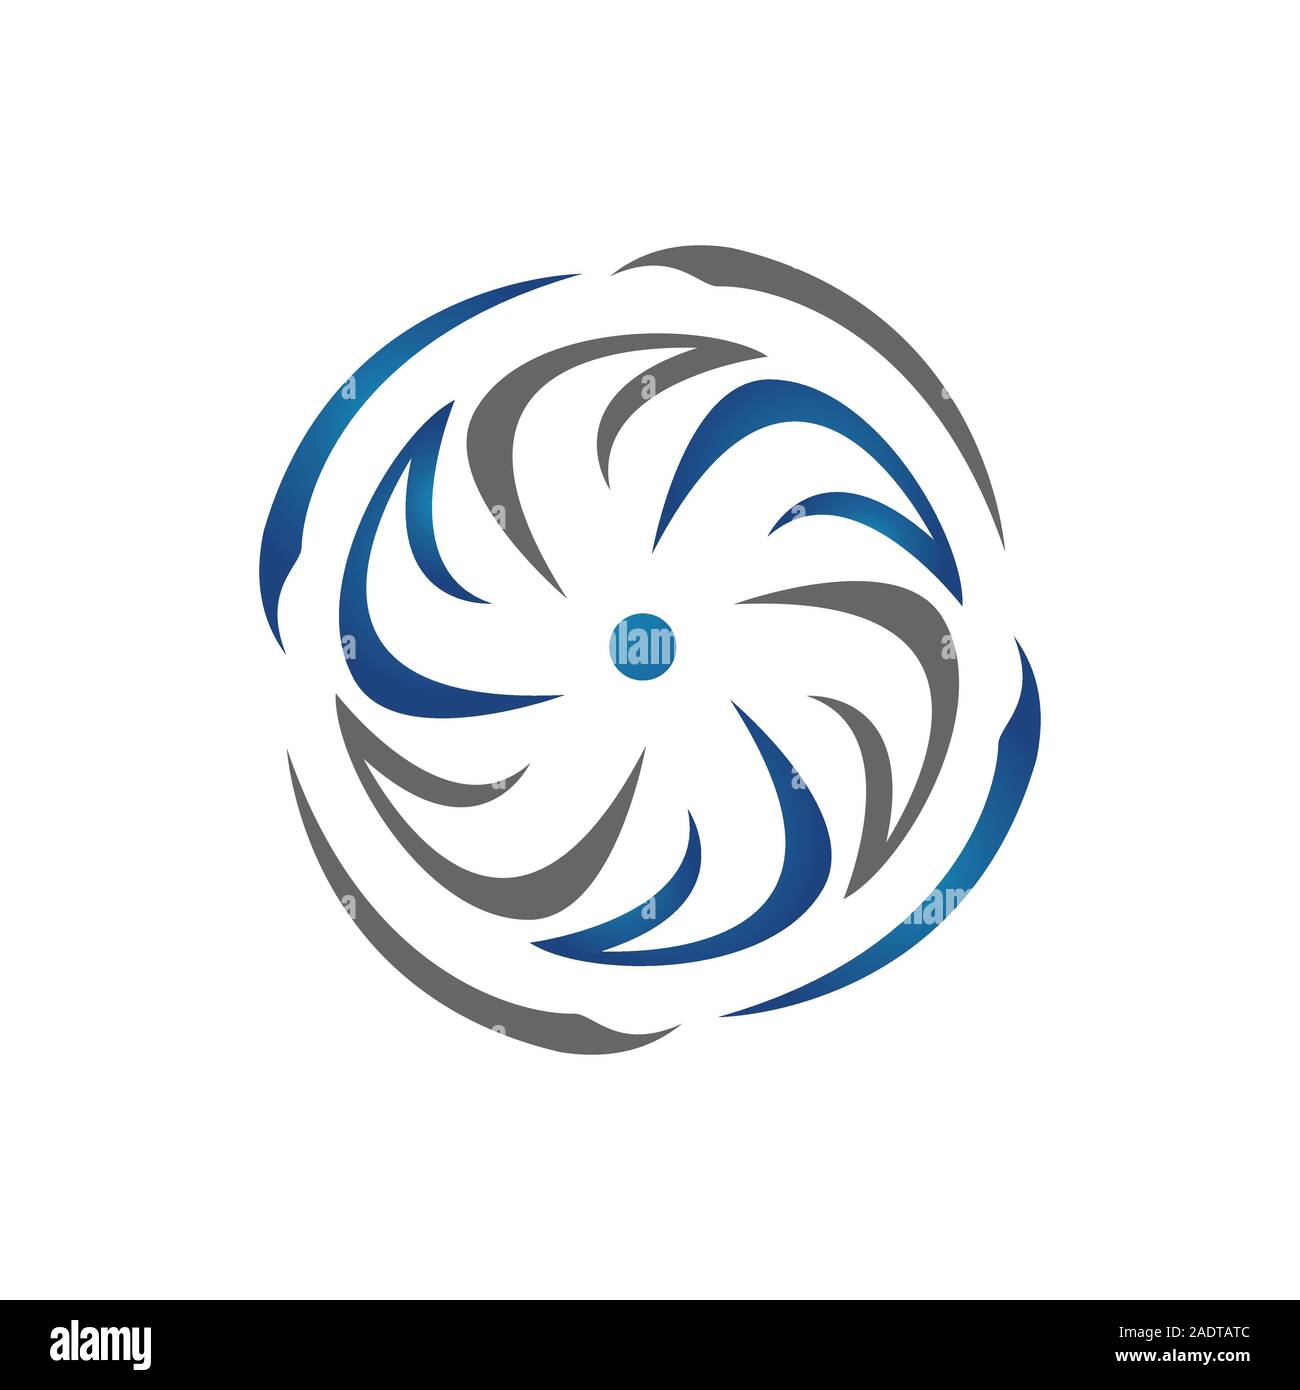 rotation of water wind turbine logo design vector illustrations. circle spinning turbulence turbine symbol. Stock Vector